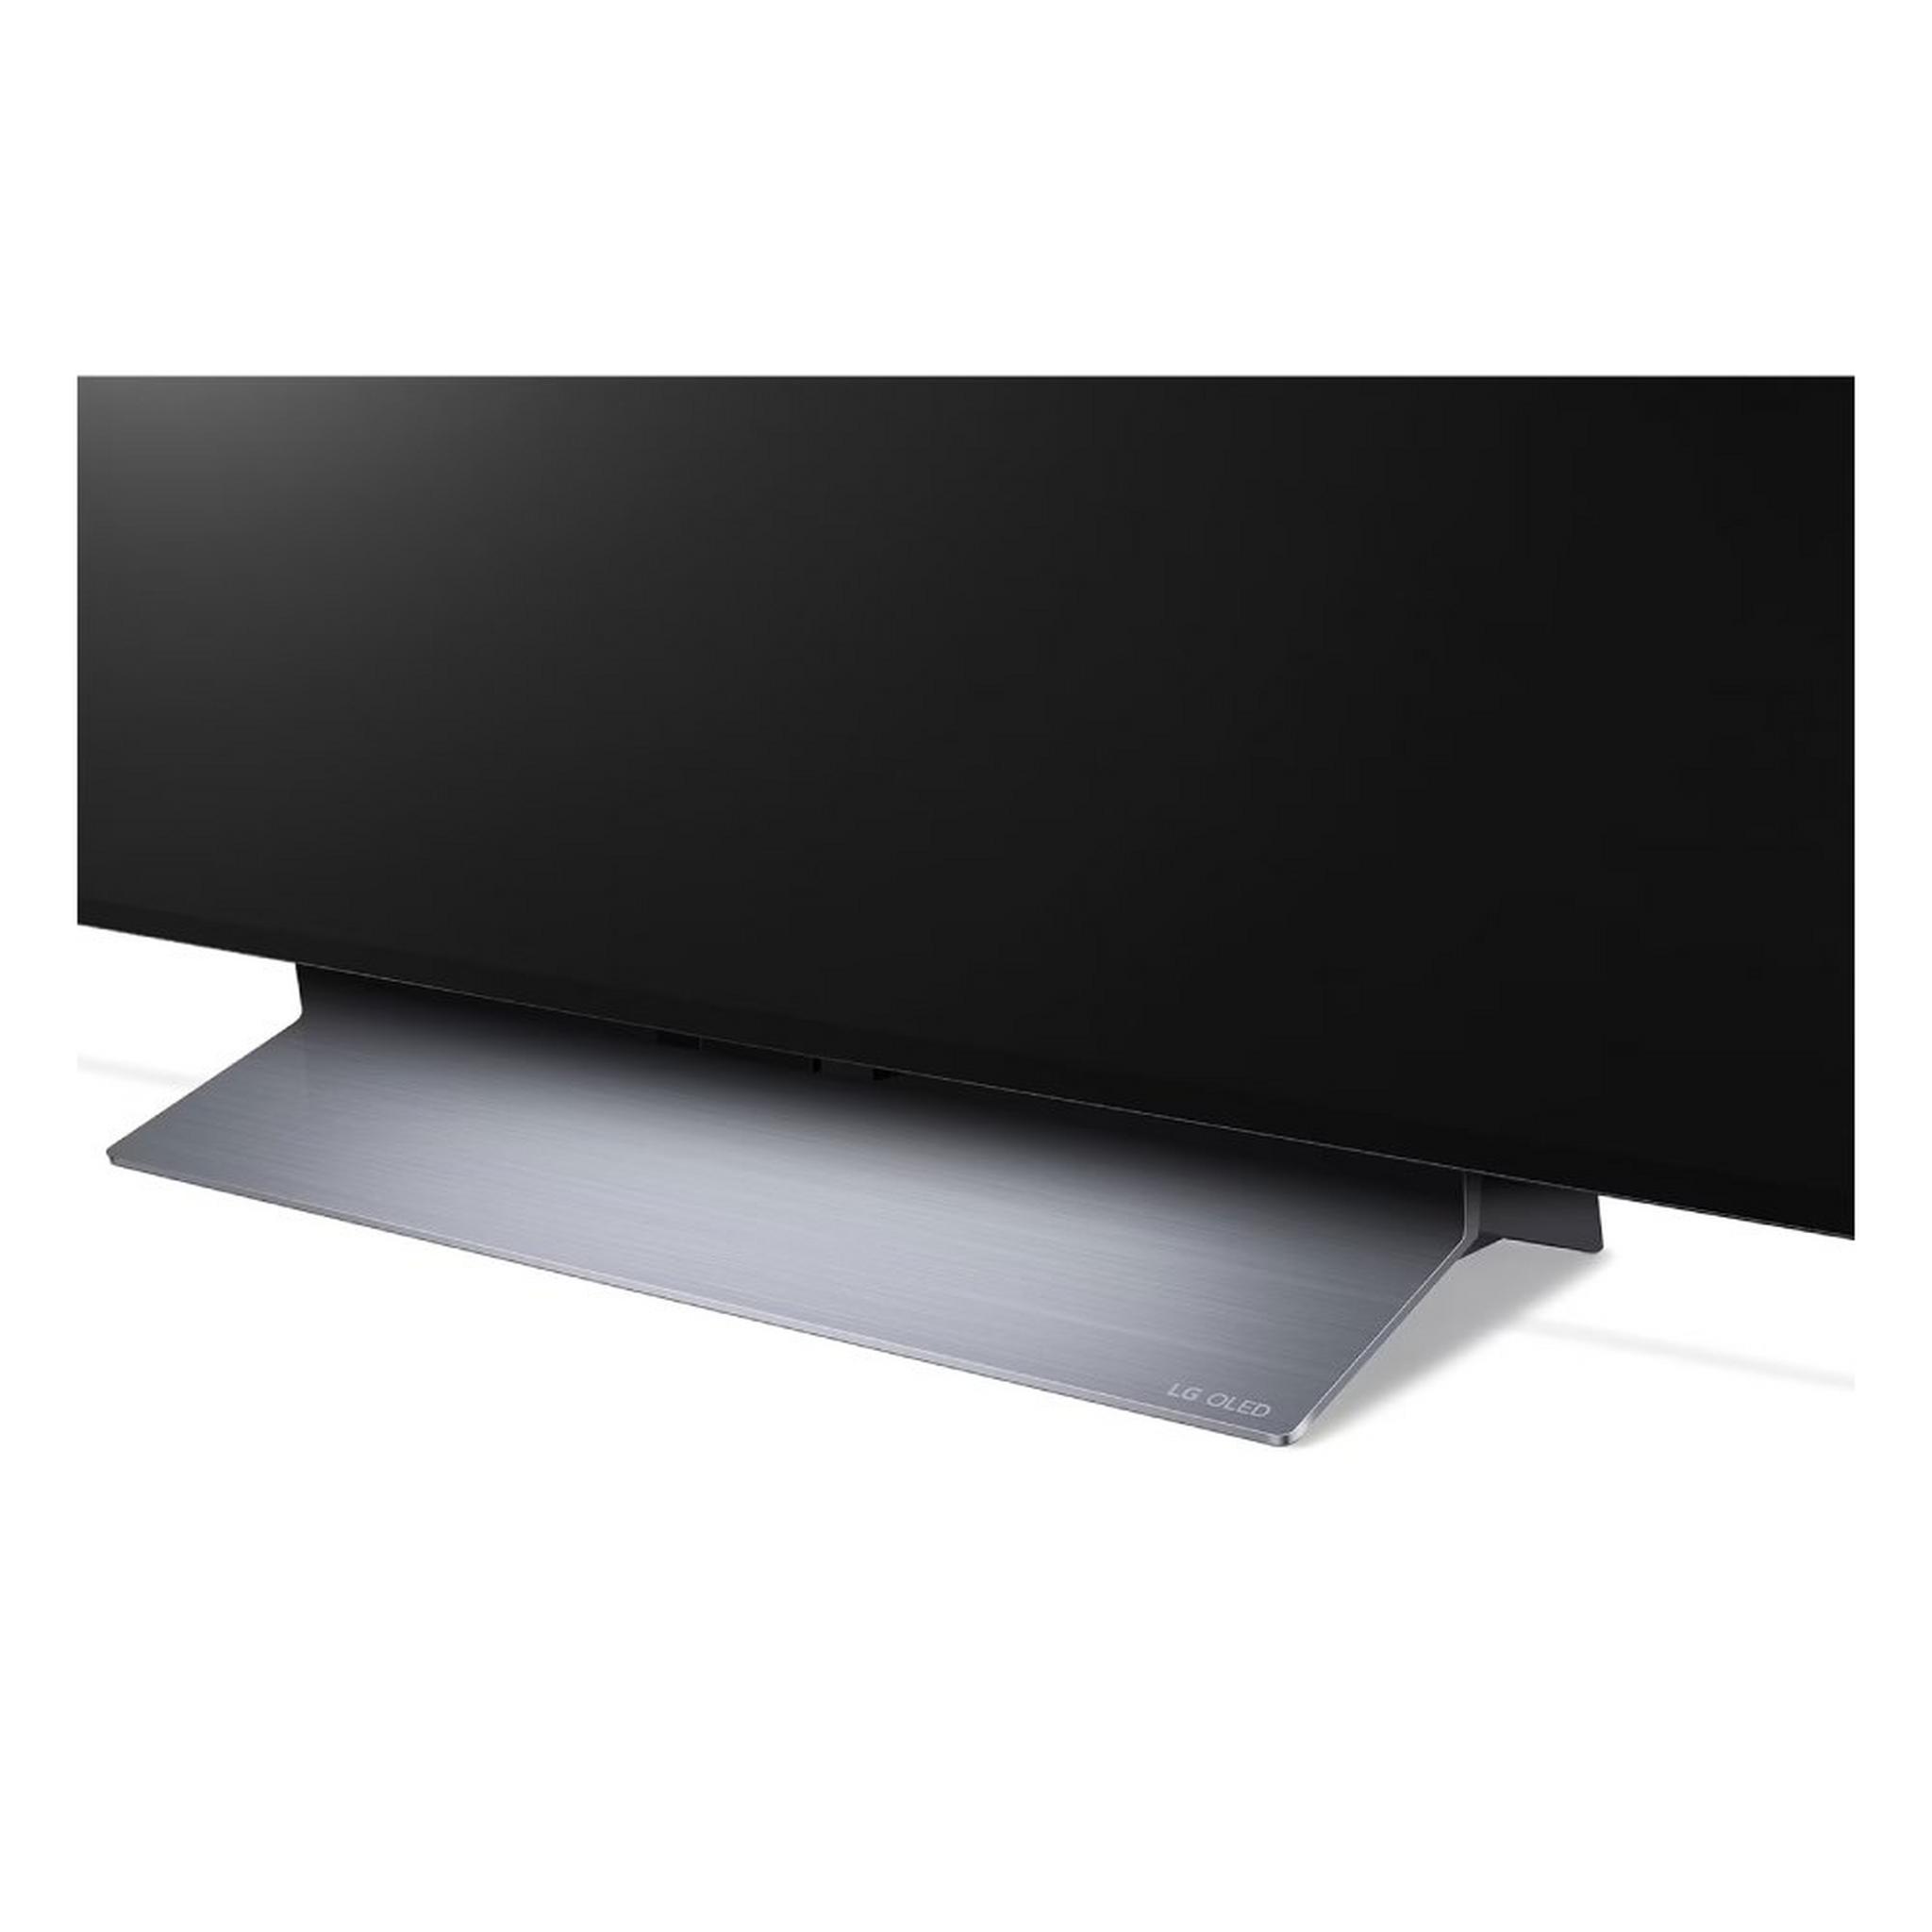 LG Smart TV C2 Series OLED 55 Inch 4K 120Hz (OLED55C2)